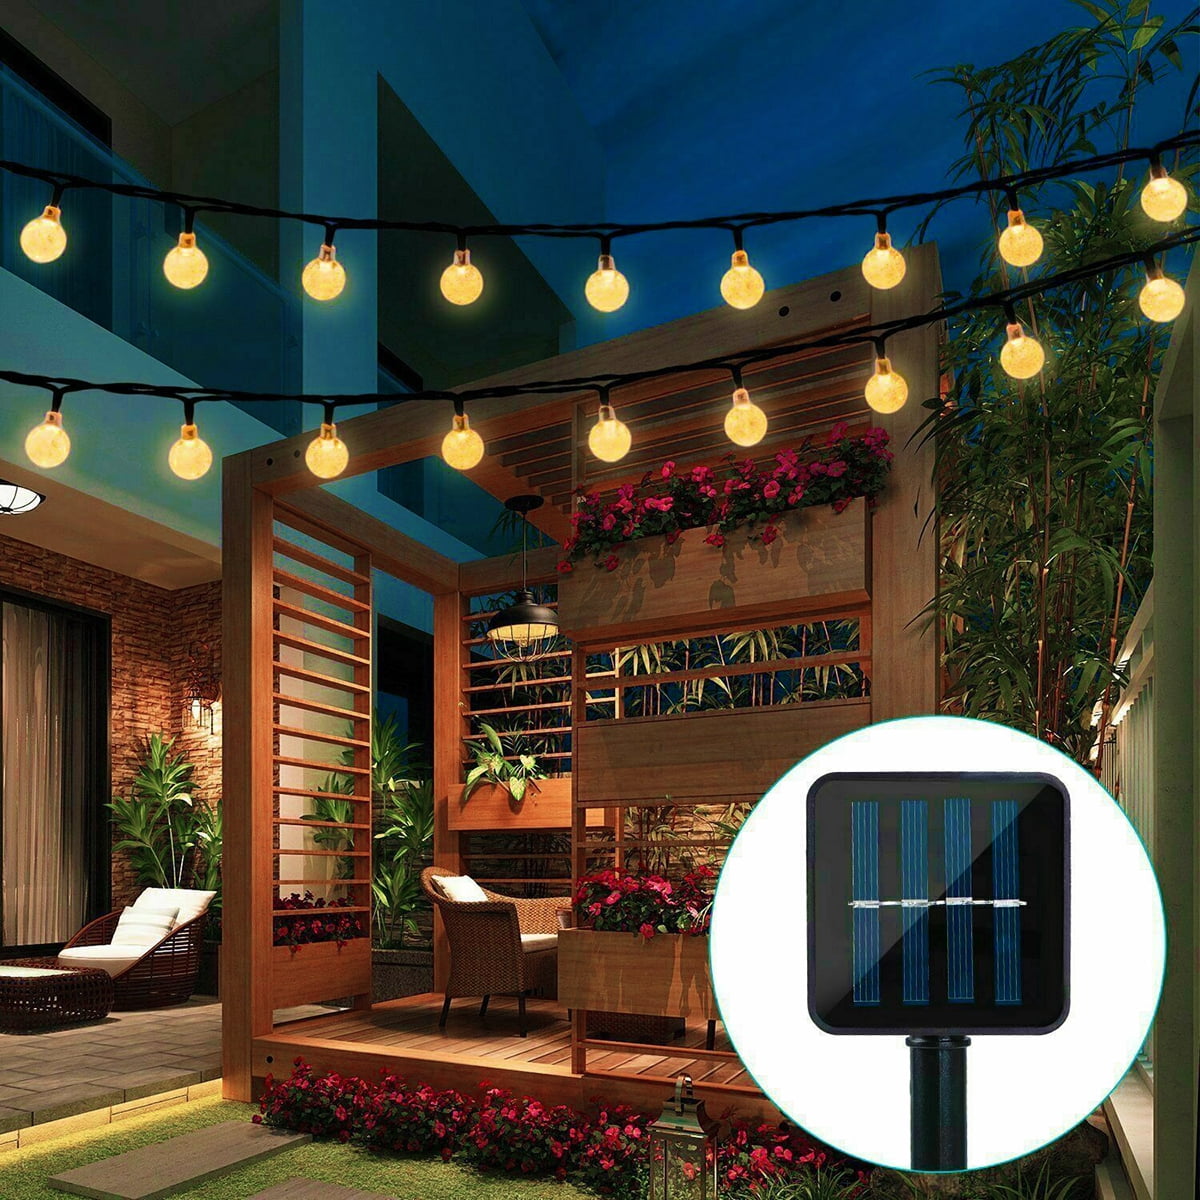 Las Vegas Sign Lights Patio Garden Lights Indoor Outdoor Decor String Lights 